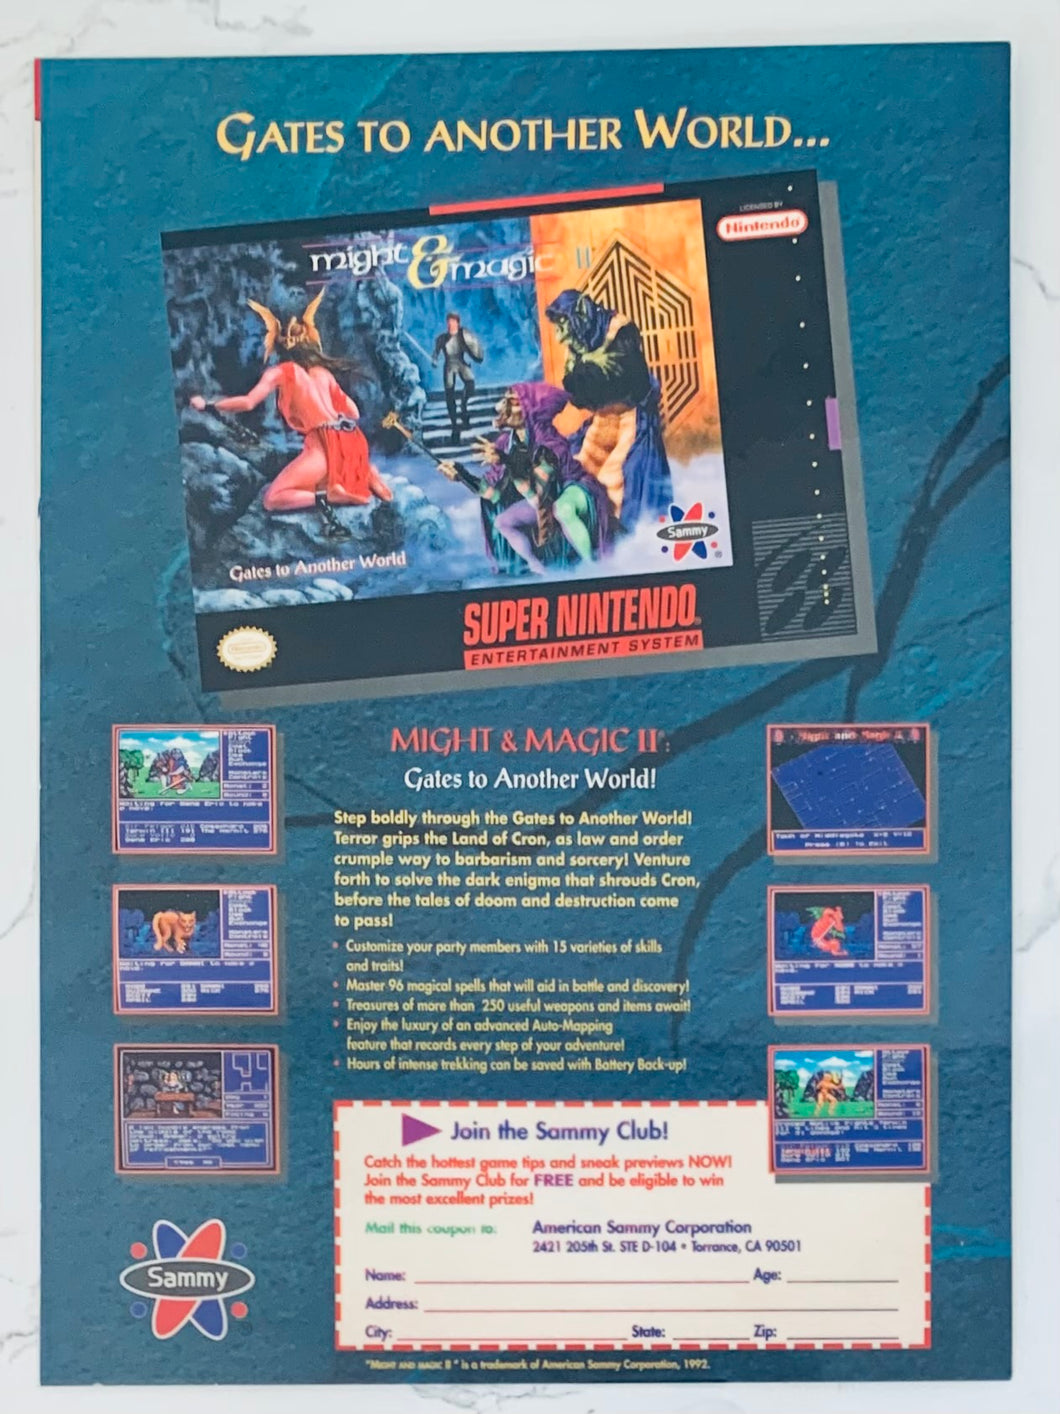 Might & Magic II - SNES - Original Vintage Advertisement - Print Ads - Laminated A4 Poster